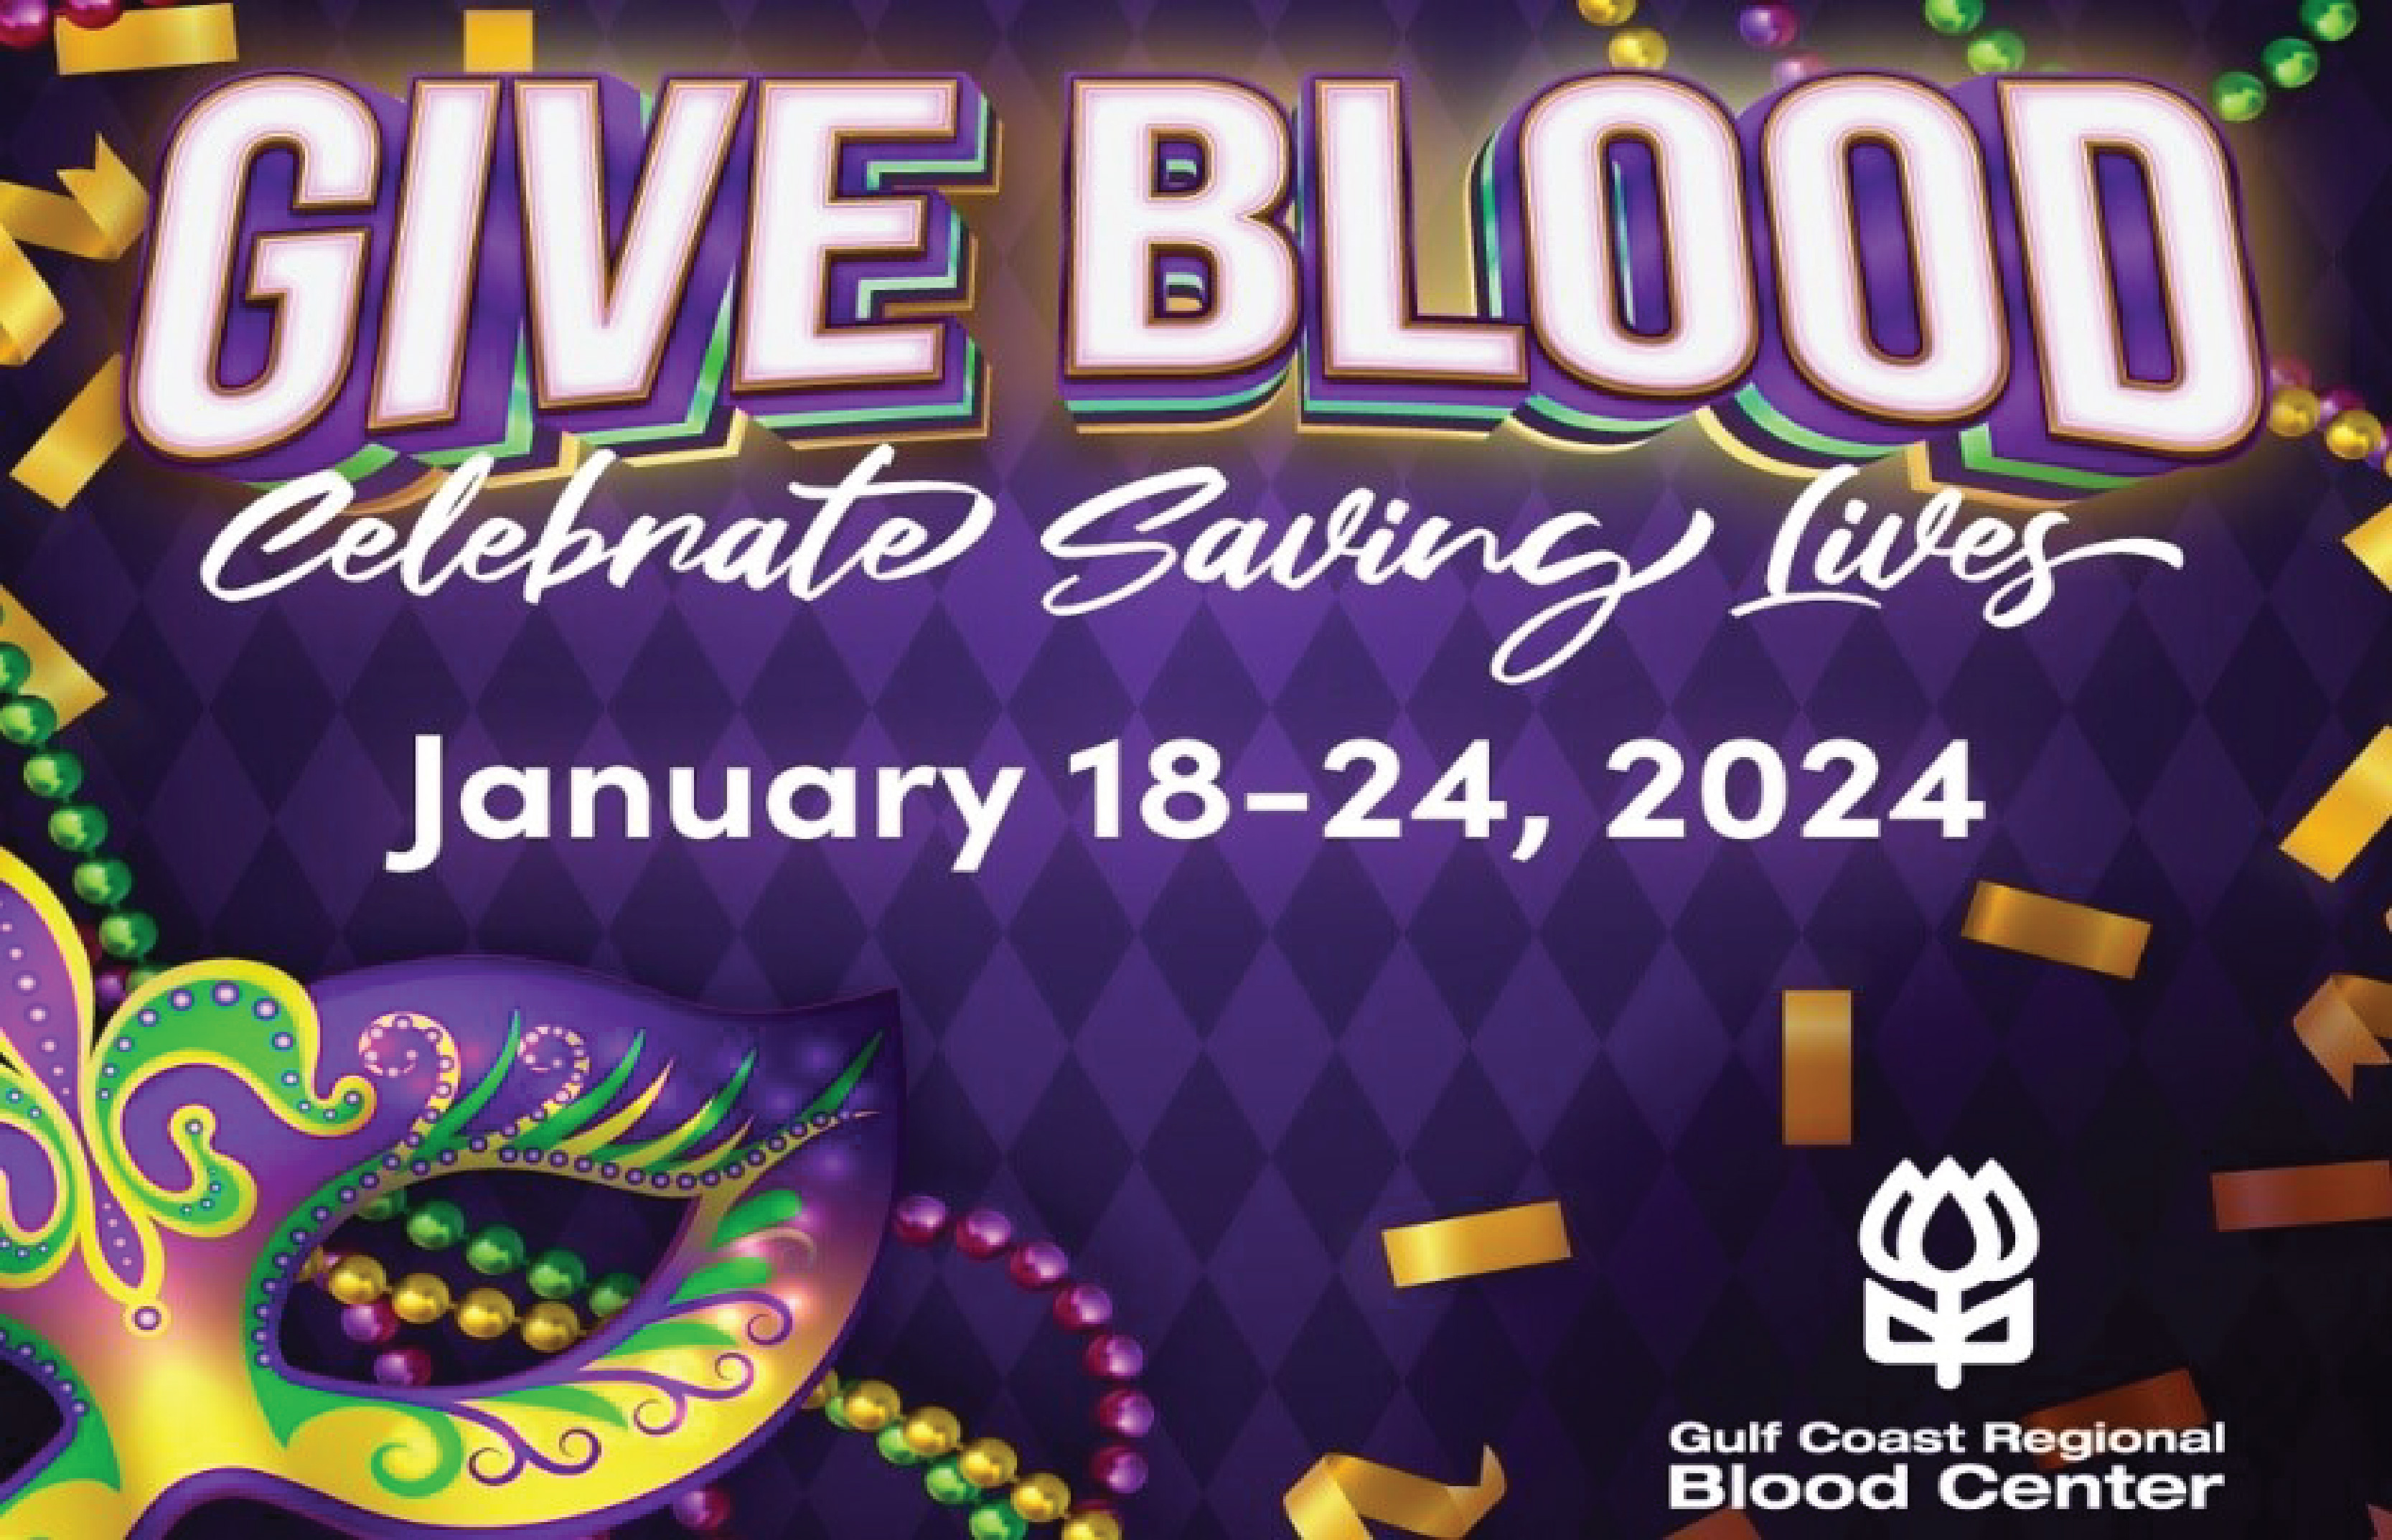 Save Lives, Celebrate at Mardi Gras! Galveston: Donate Blood, Get Free Admission